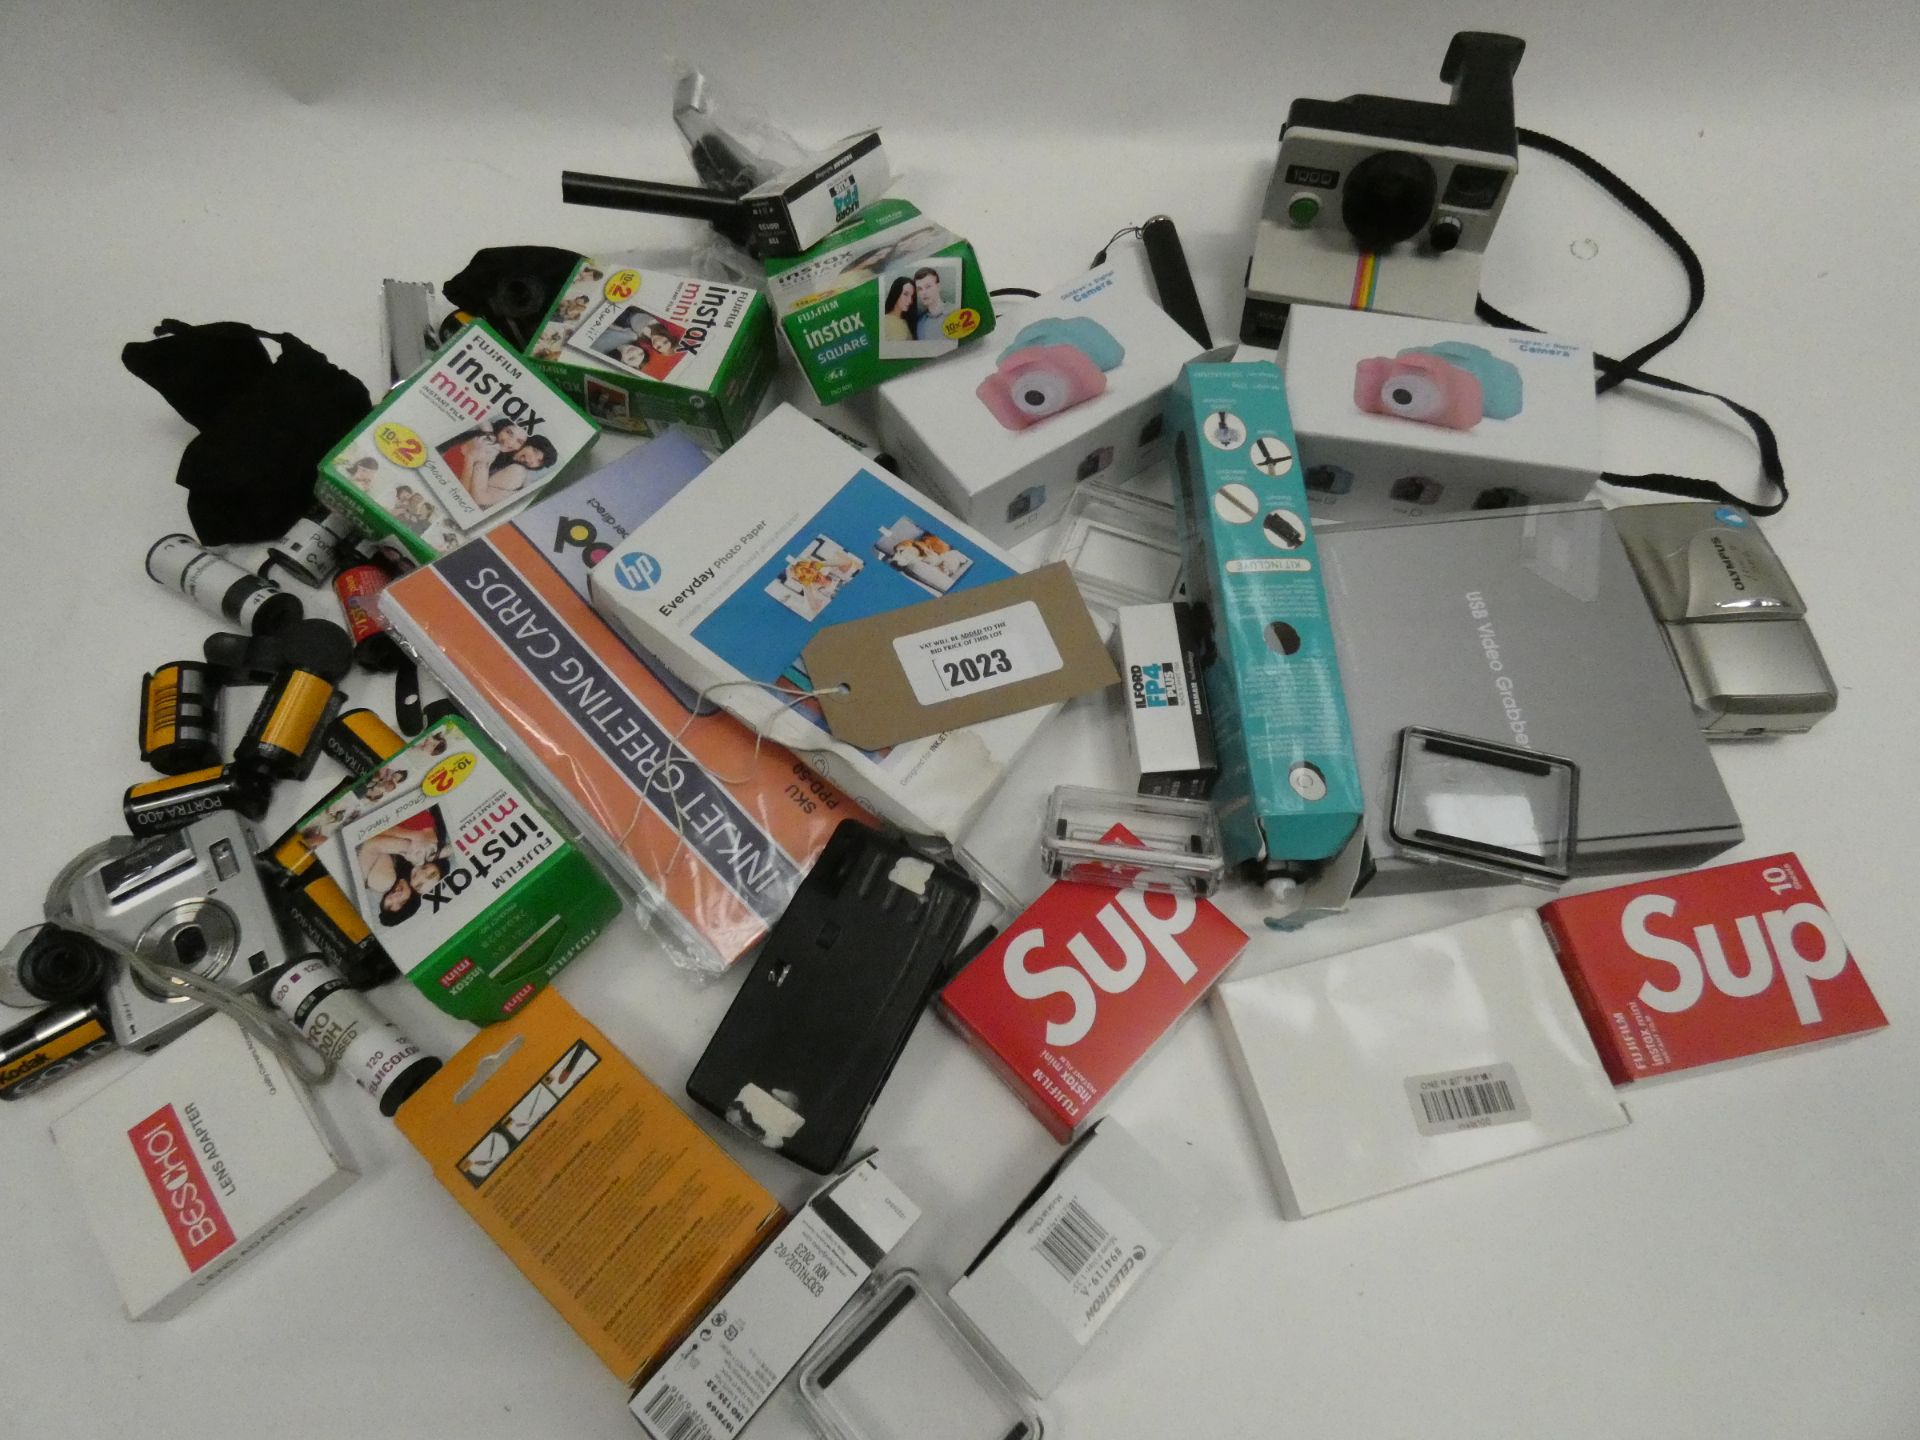 Bag containing quantity of various photographic accessories